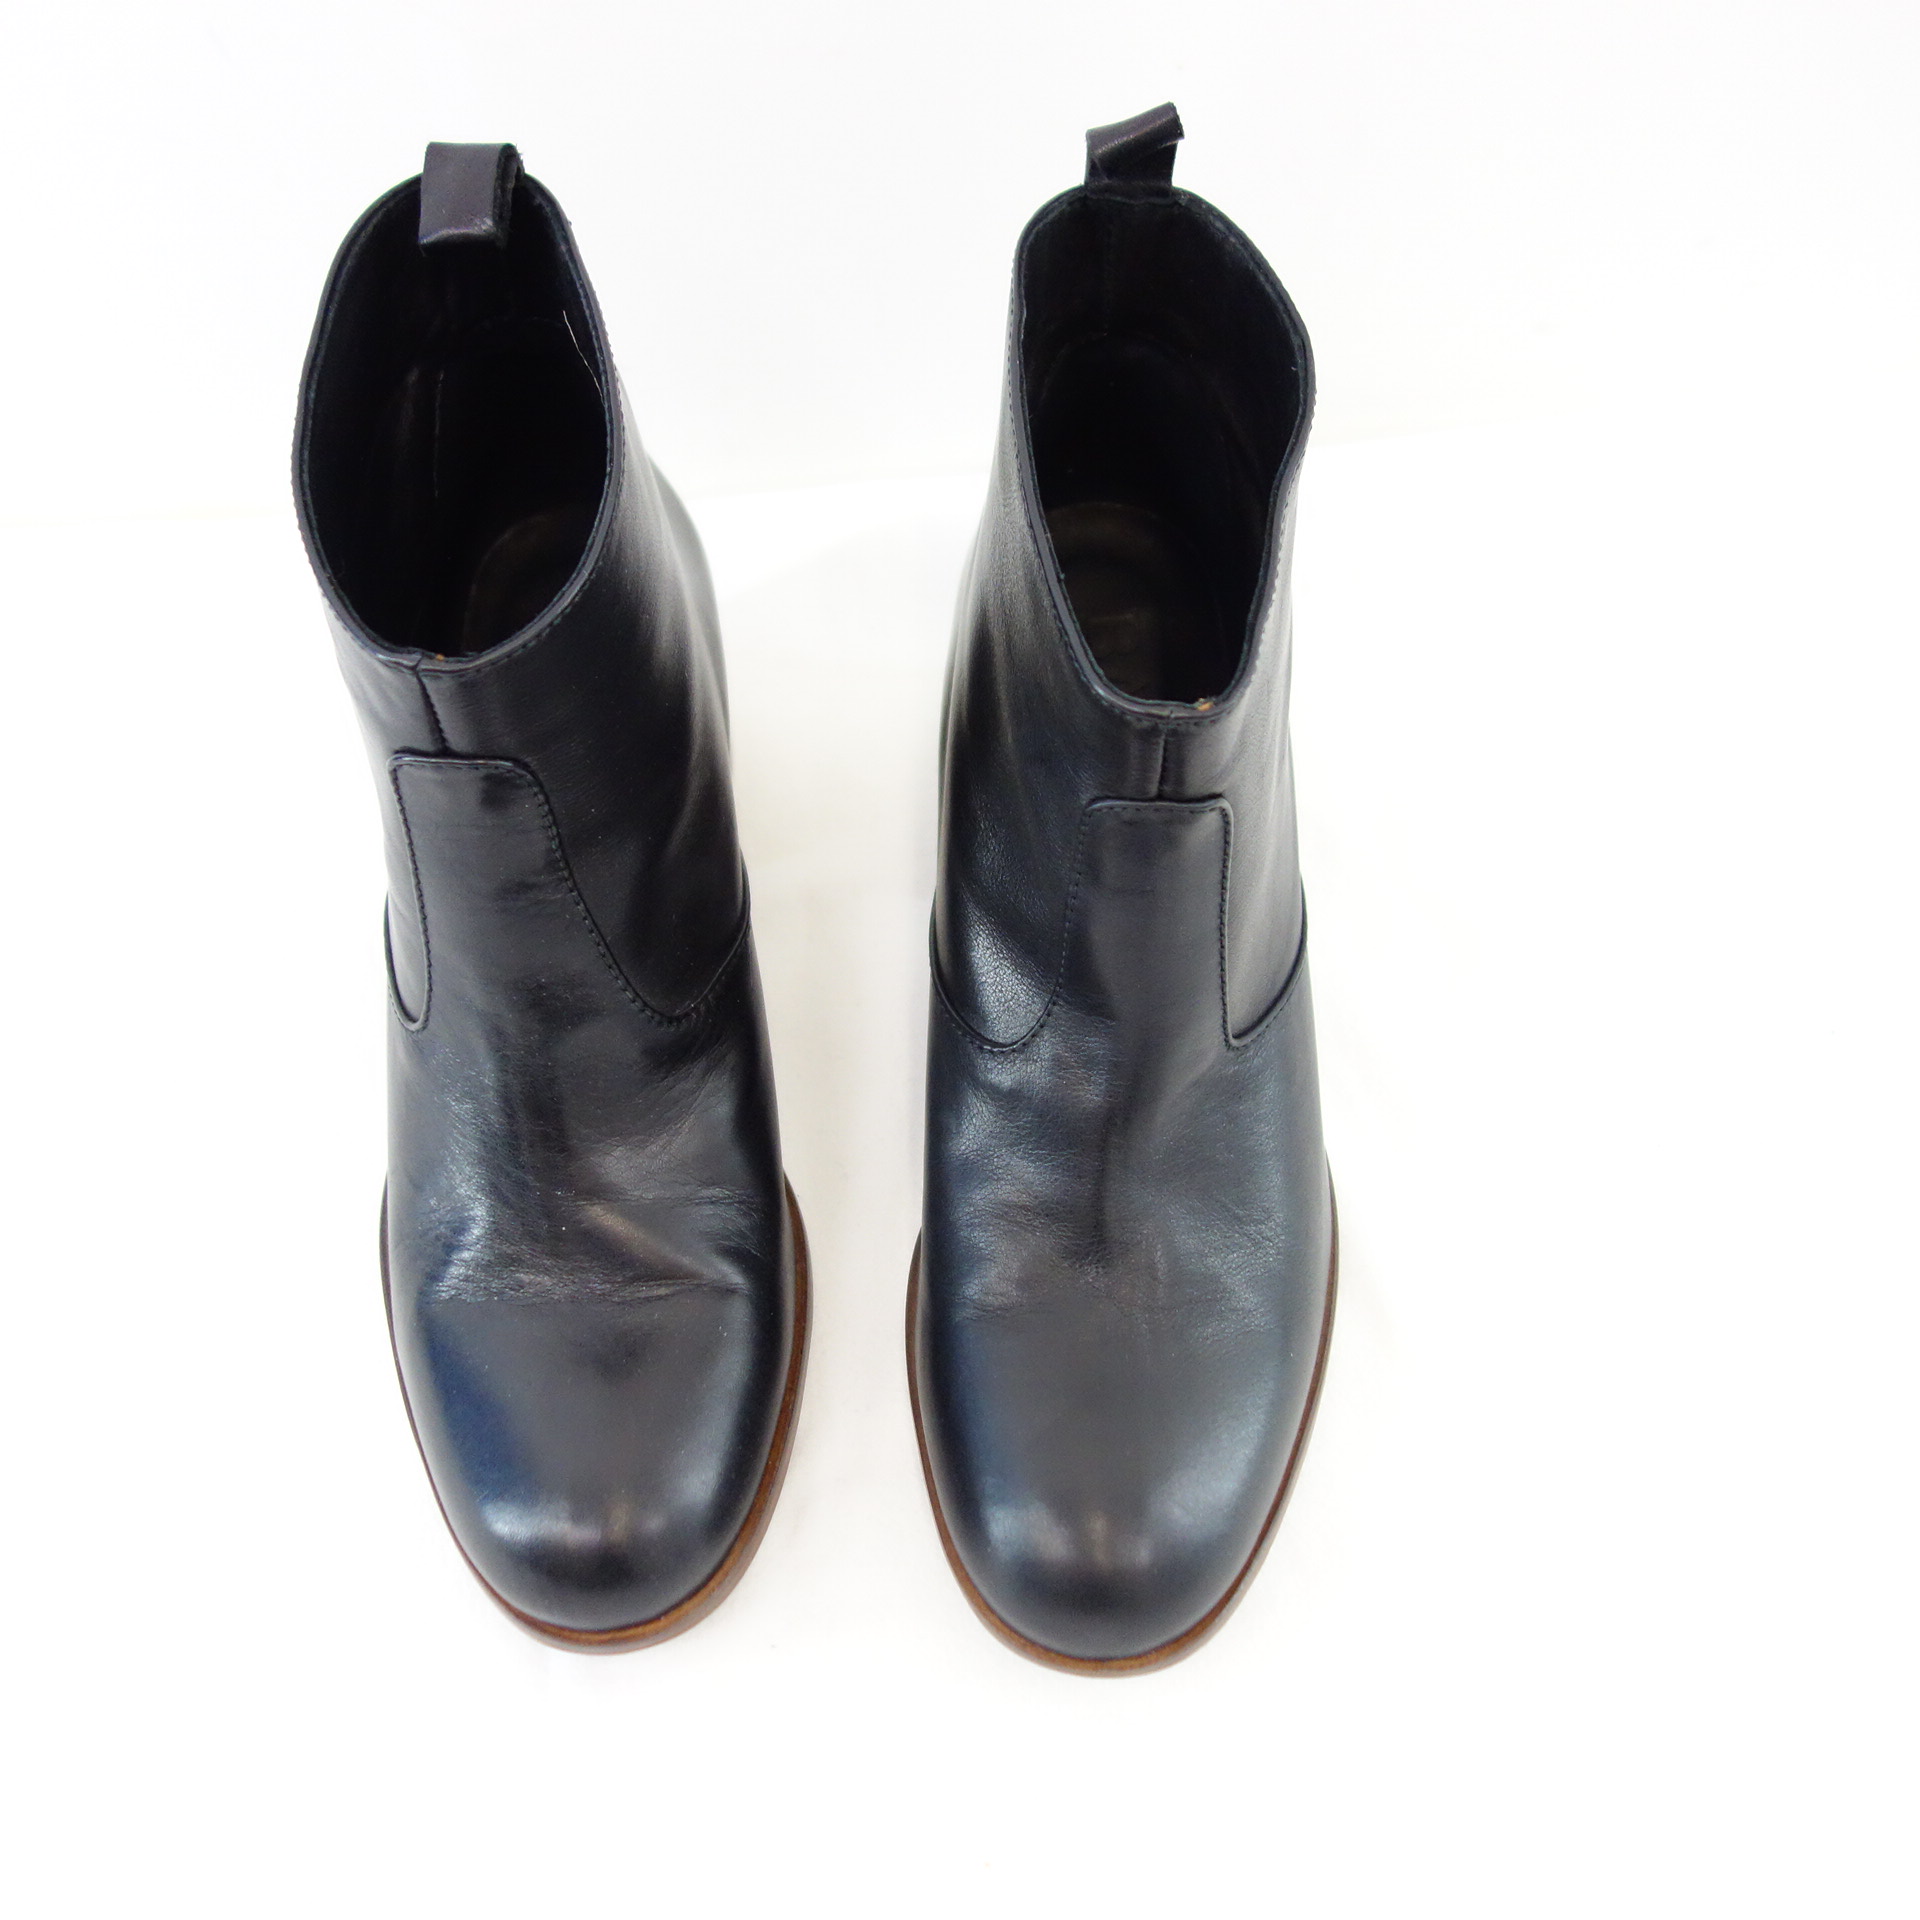 BALTARINI Damen Schuhe Stiefeletten Boots Stiefel Lais 36 Schwarz Leder Np 219 Neu